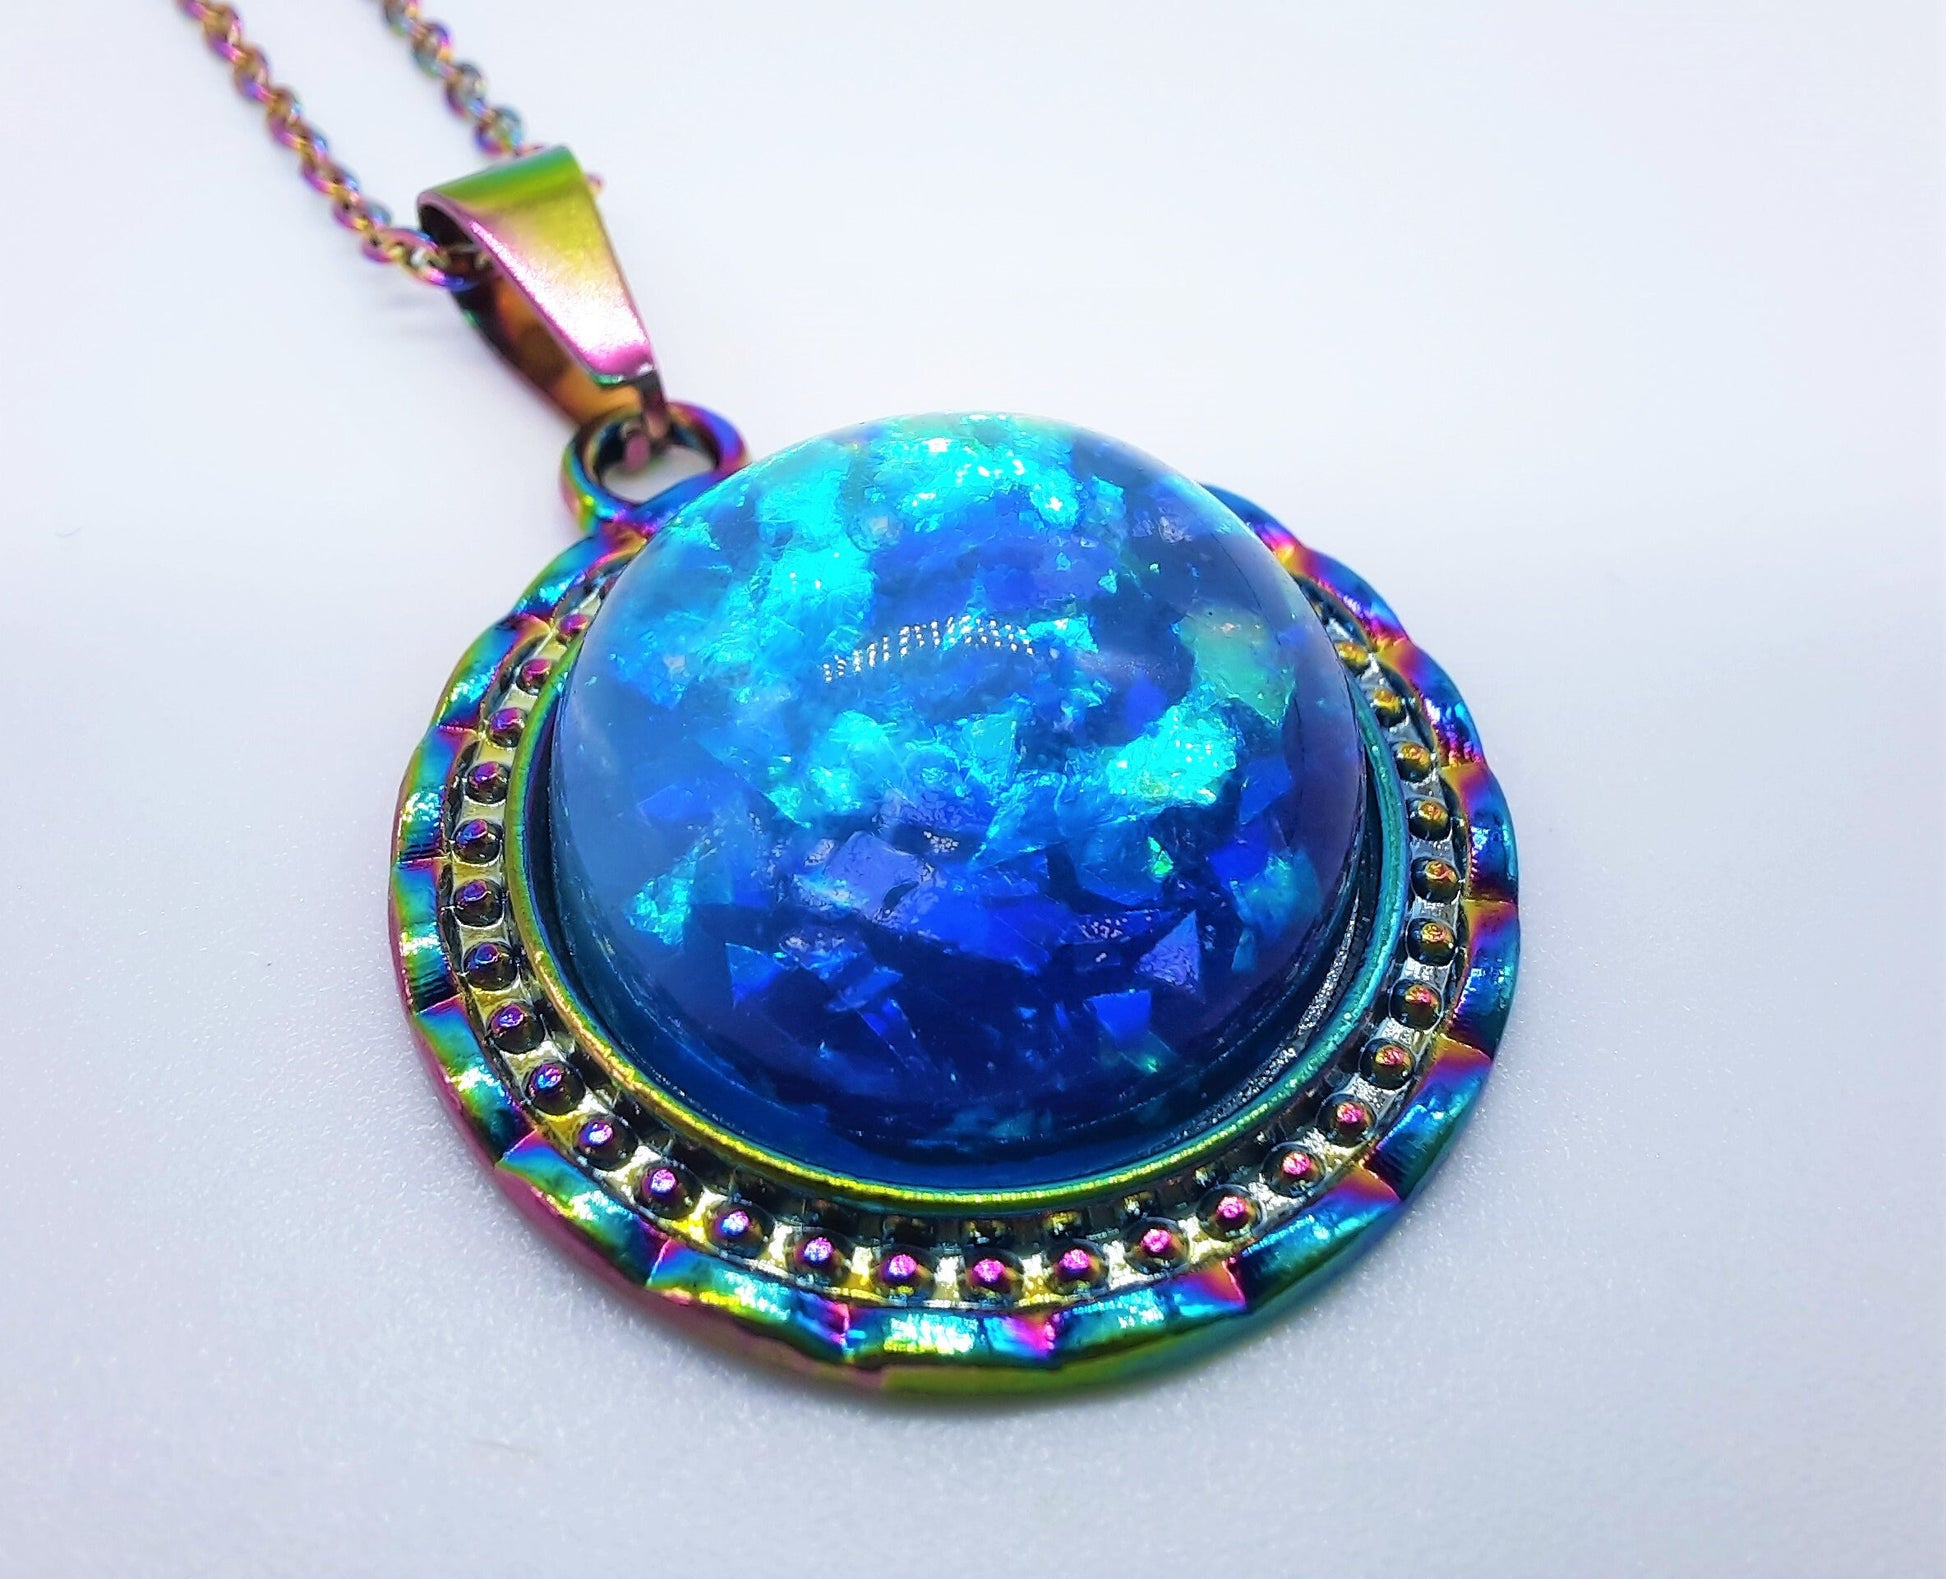 Translucent Glittery Blue Pendant Necklace - Rainbow Chromium Stainless Steel - Hypoallergenic - Glass Cabochon